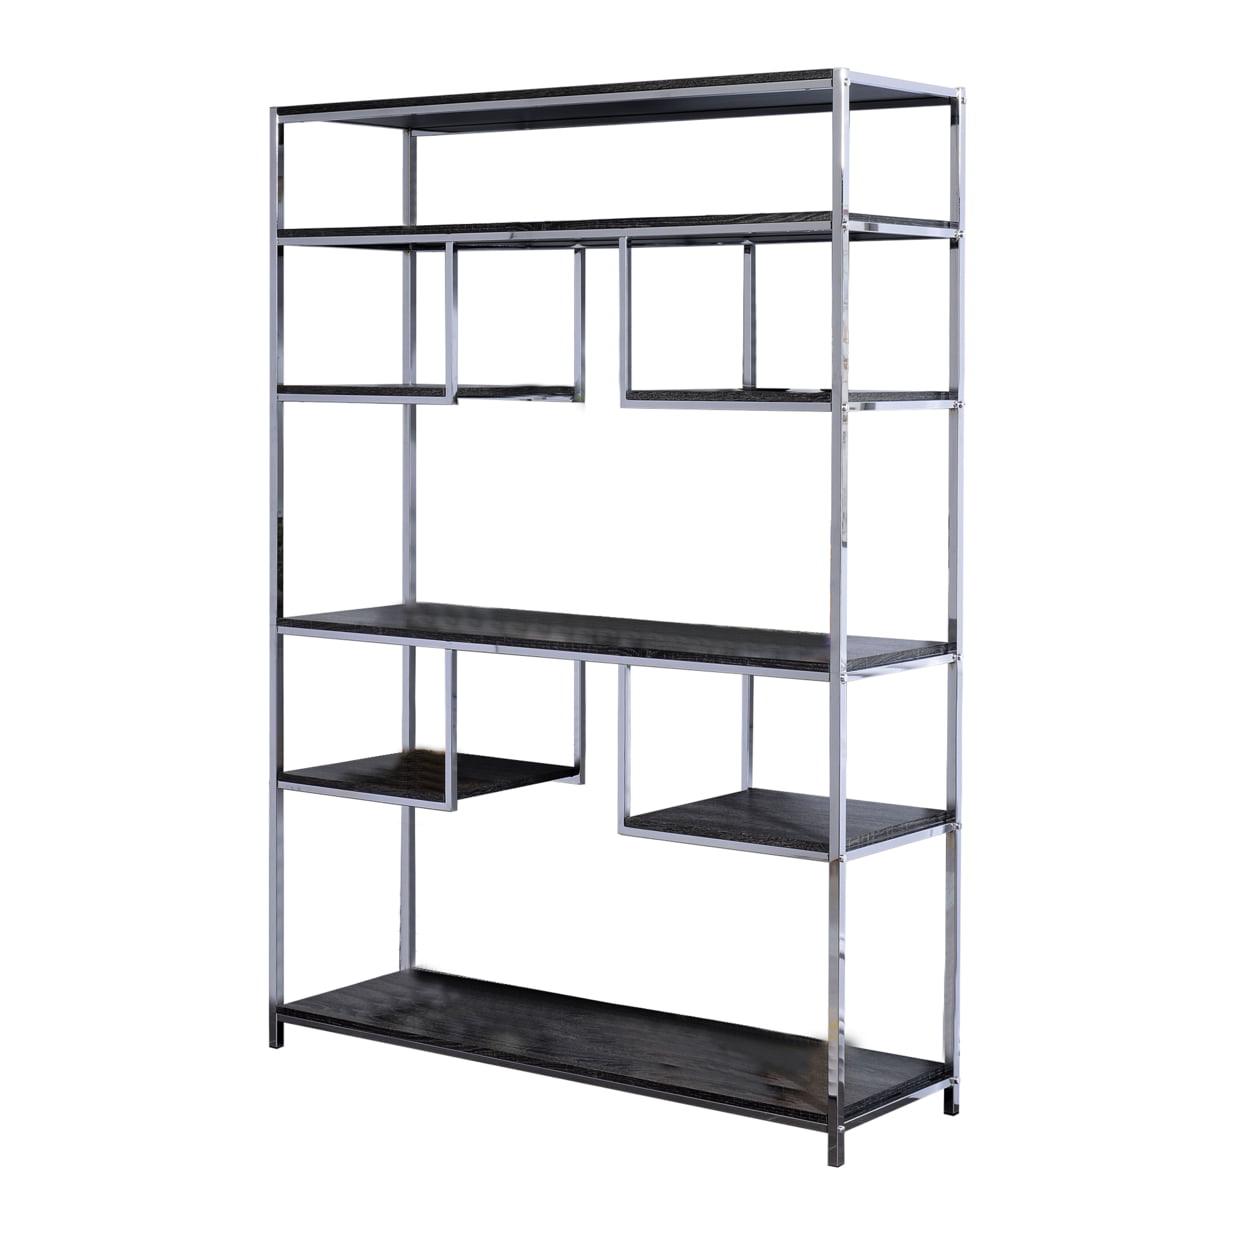 Bm209606 72 X 16 X 49 In. Etagere Bookshelf With 7 Shelves & Geometric Pattern, Silver & Dark Gray